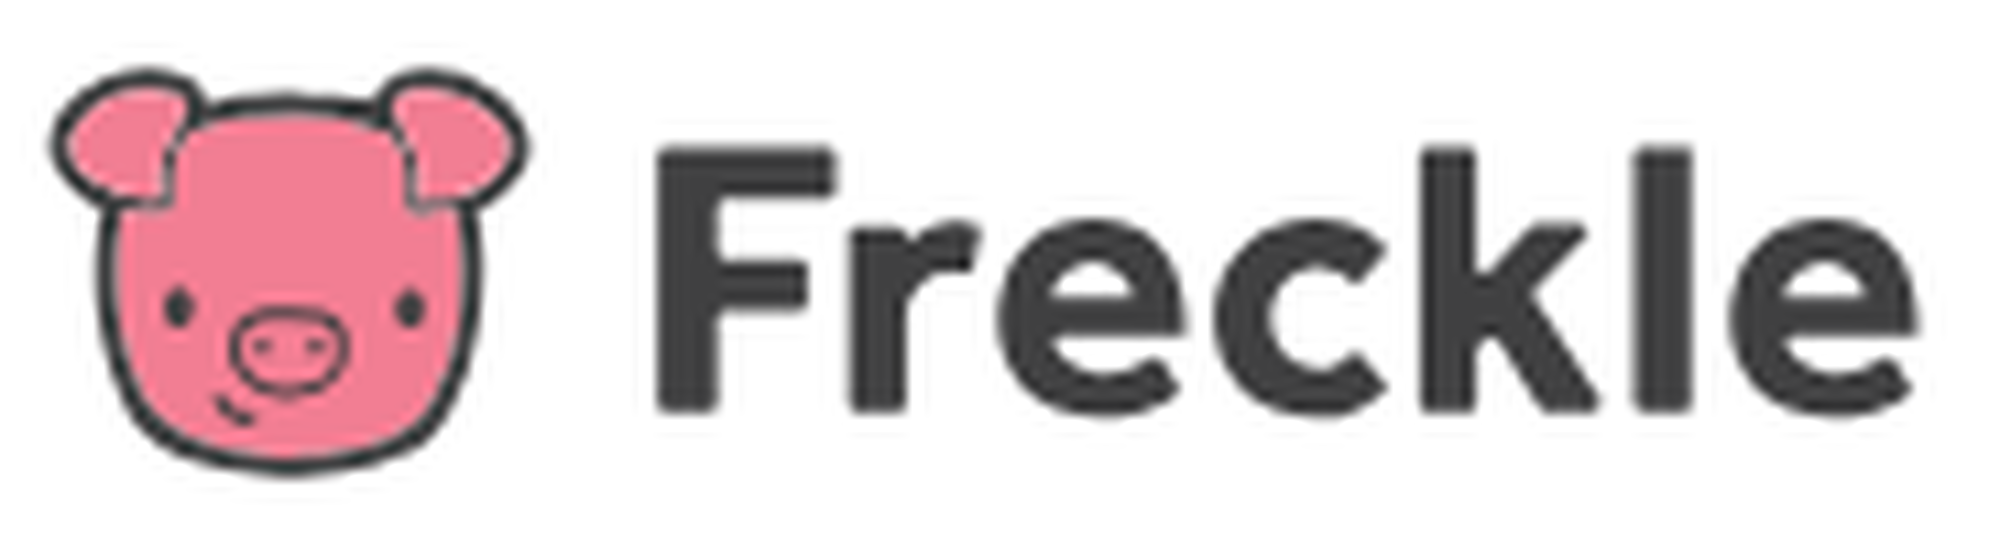 Freckle Ed logo